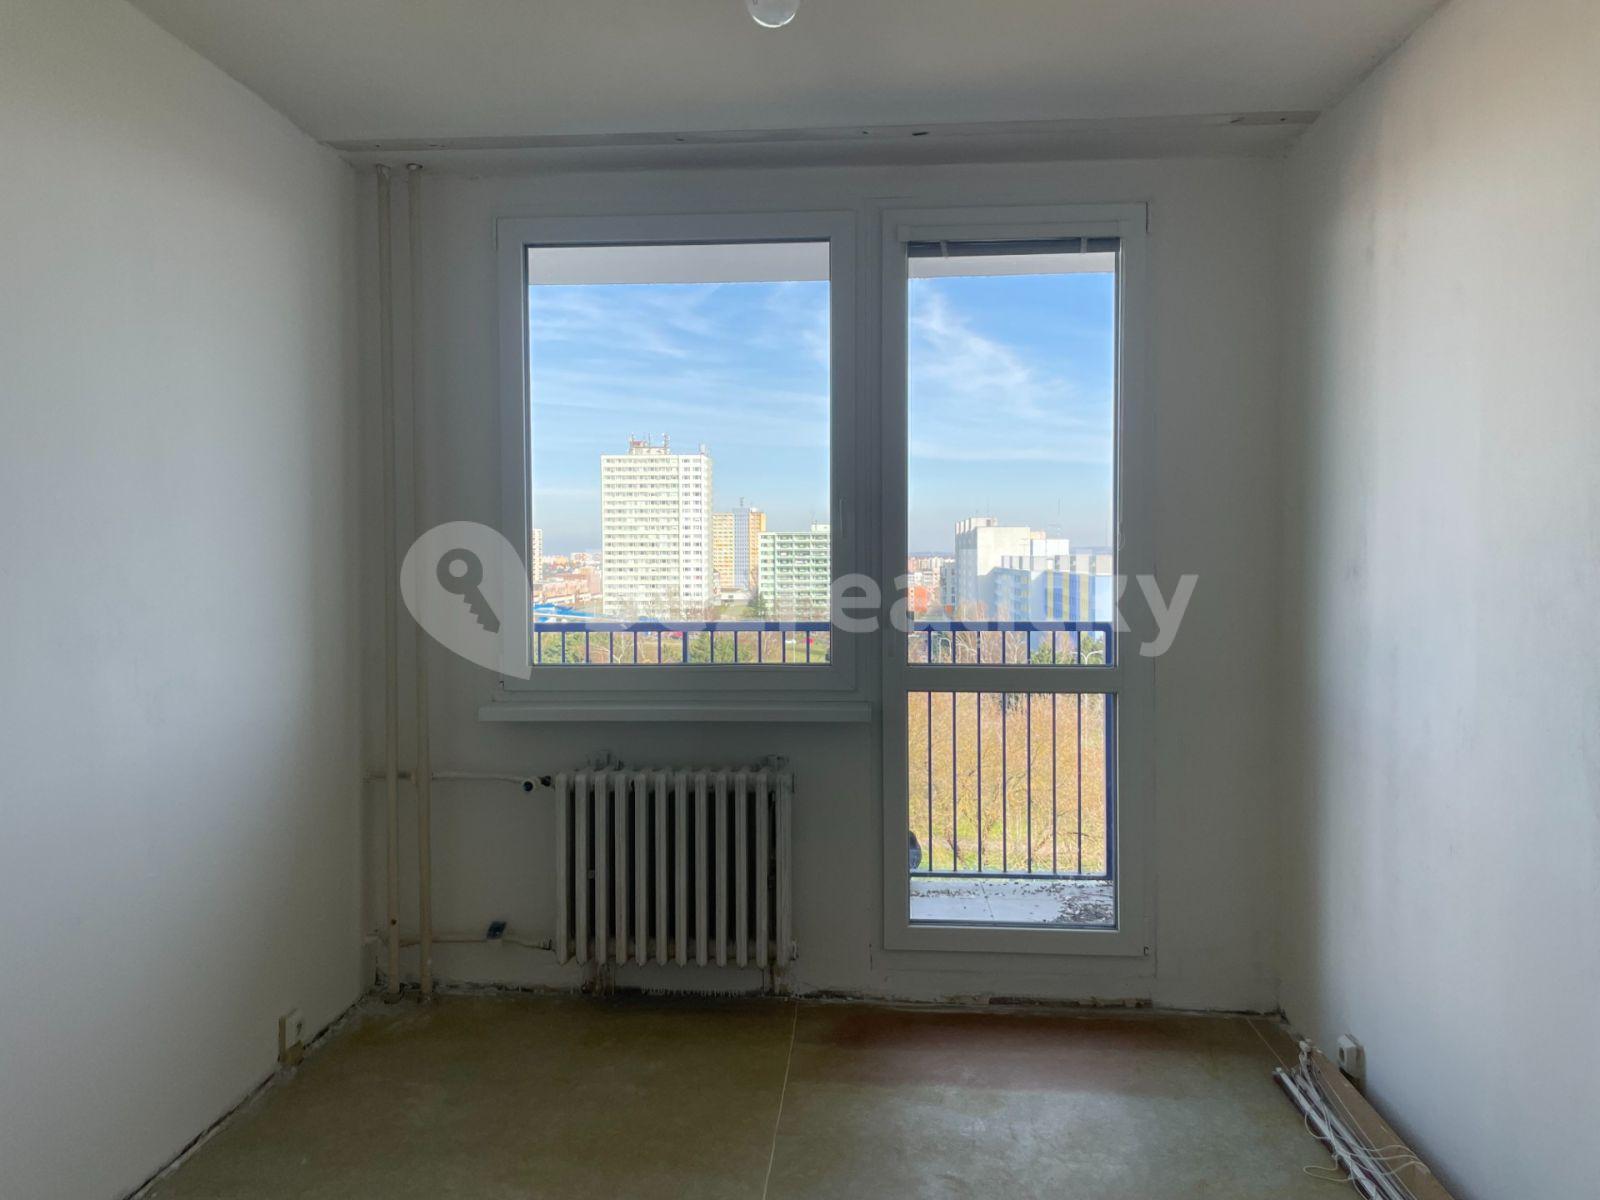 3 bedroom flat for sale, 64 m², Konstantinova, Prague, Prague